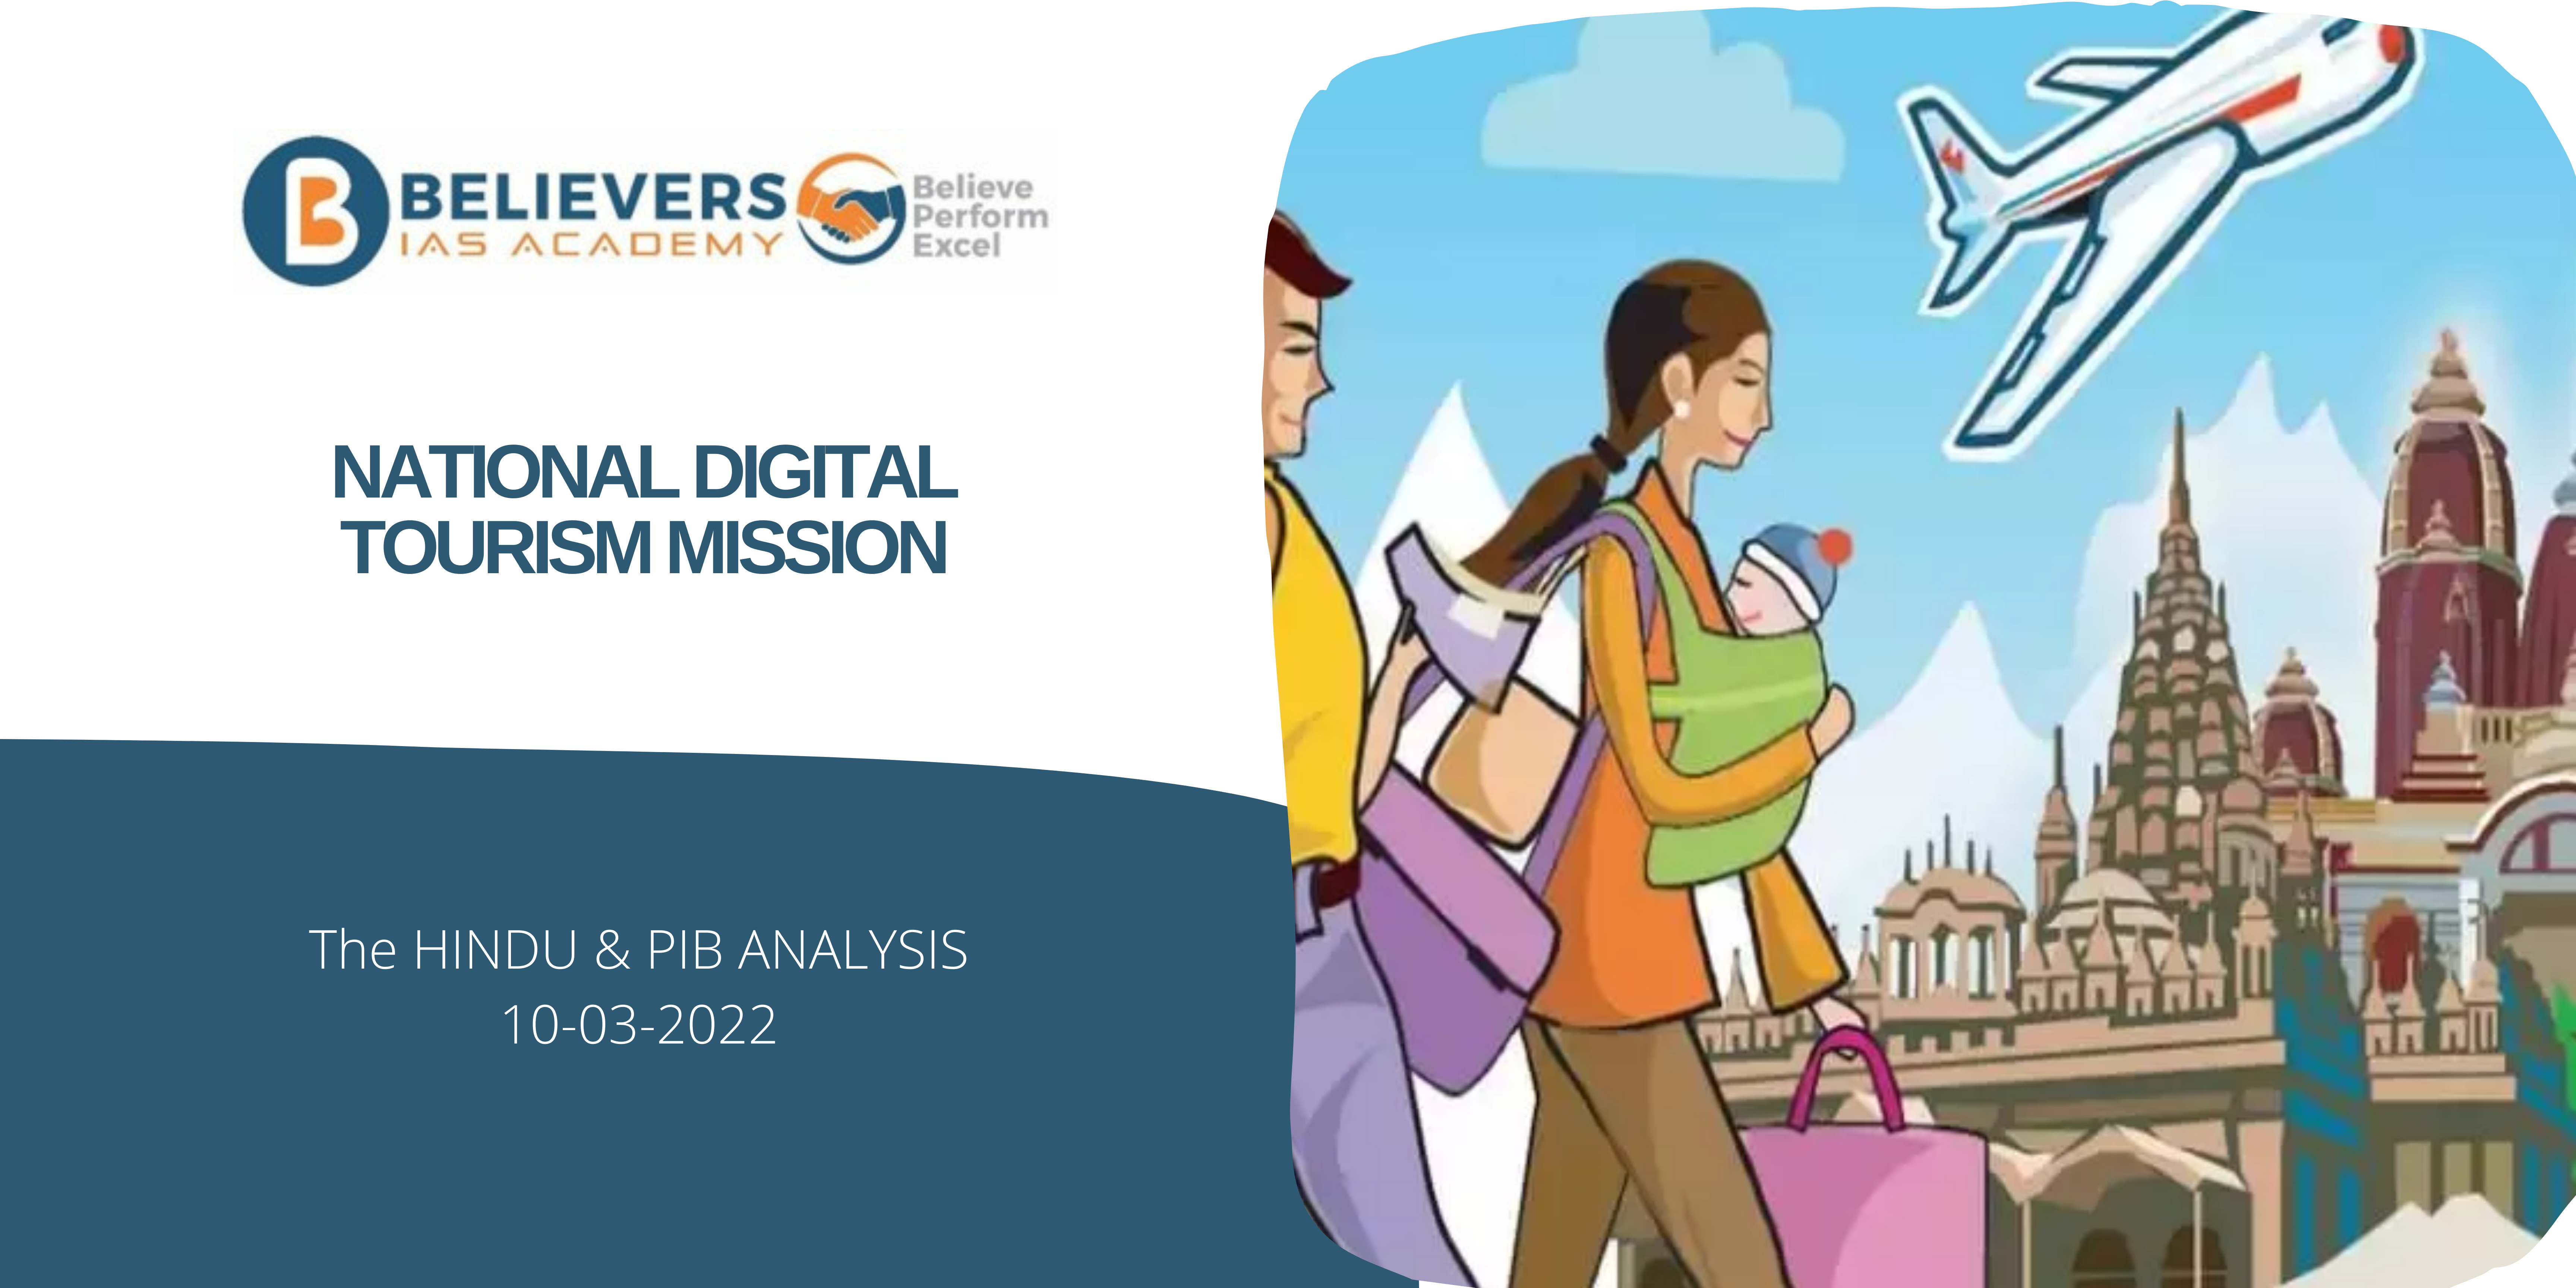 UPSC Current affairs - National Digital Tourism Mission